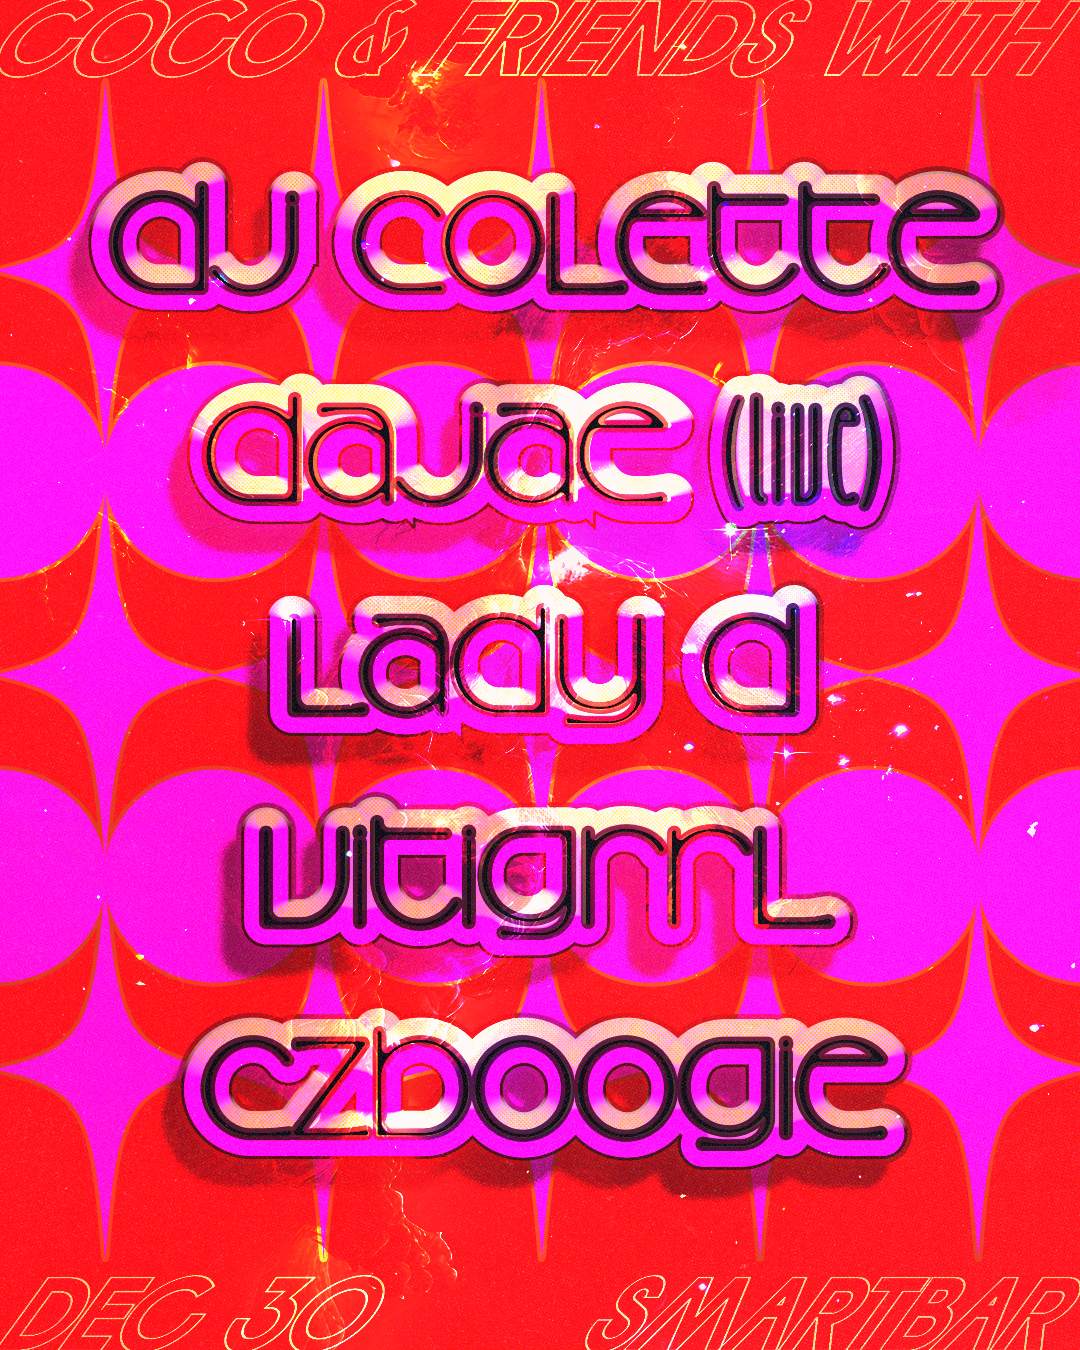 Coco & Friends with DJ Colette - Dajae (Live) - Lady D - VITIGRRL - Czboogie - フライヤー表